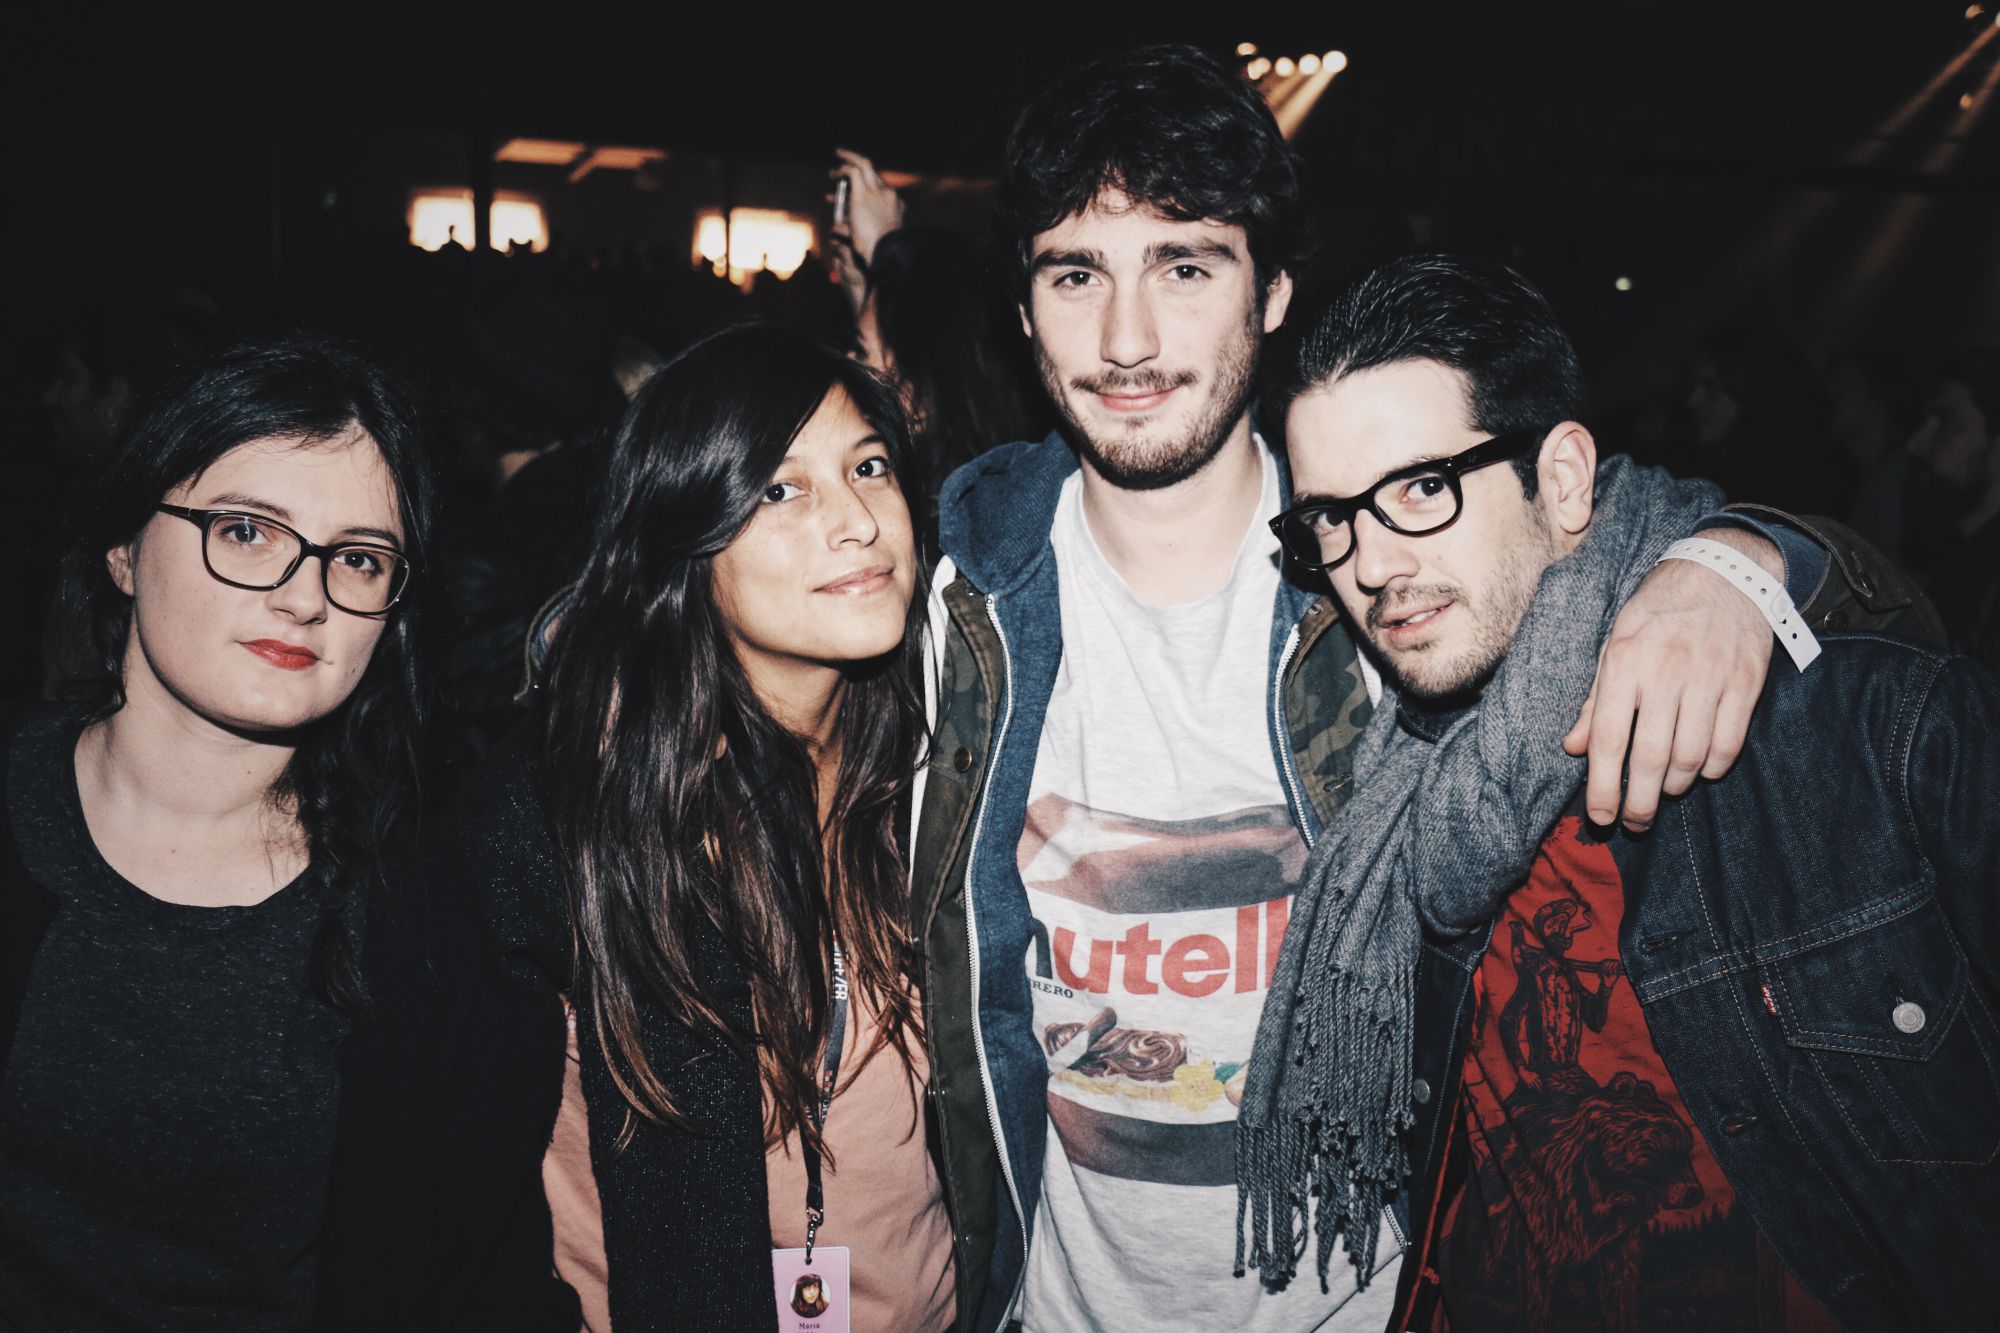 Pitchfork Festival Paris - Samedi 31 octobre 2015 (photo 12)